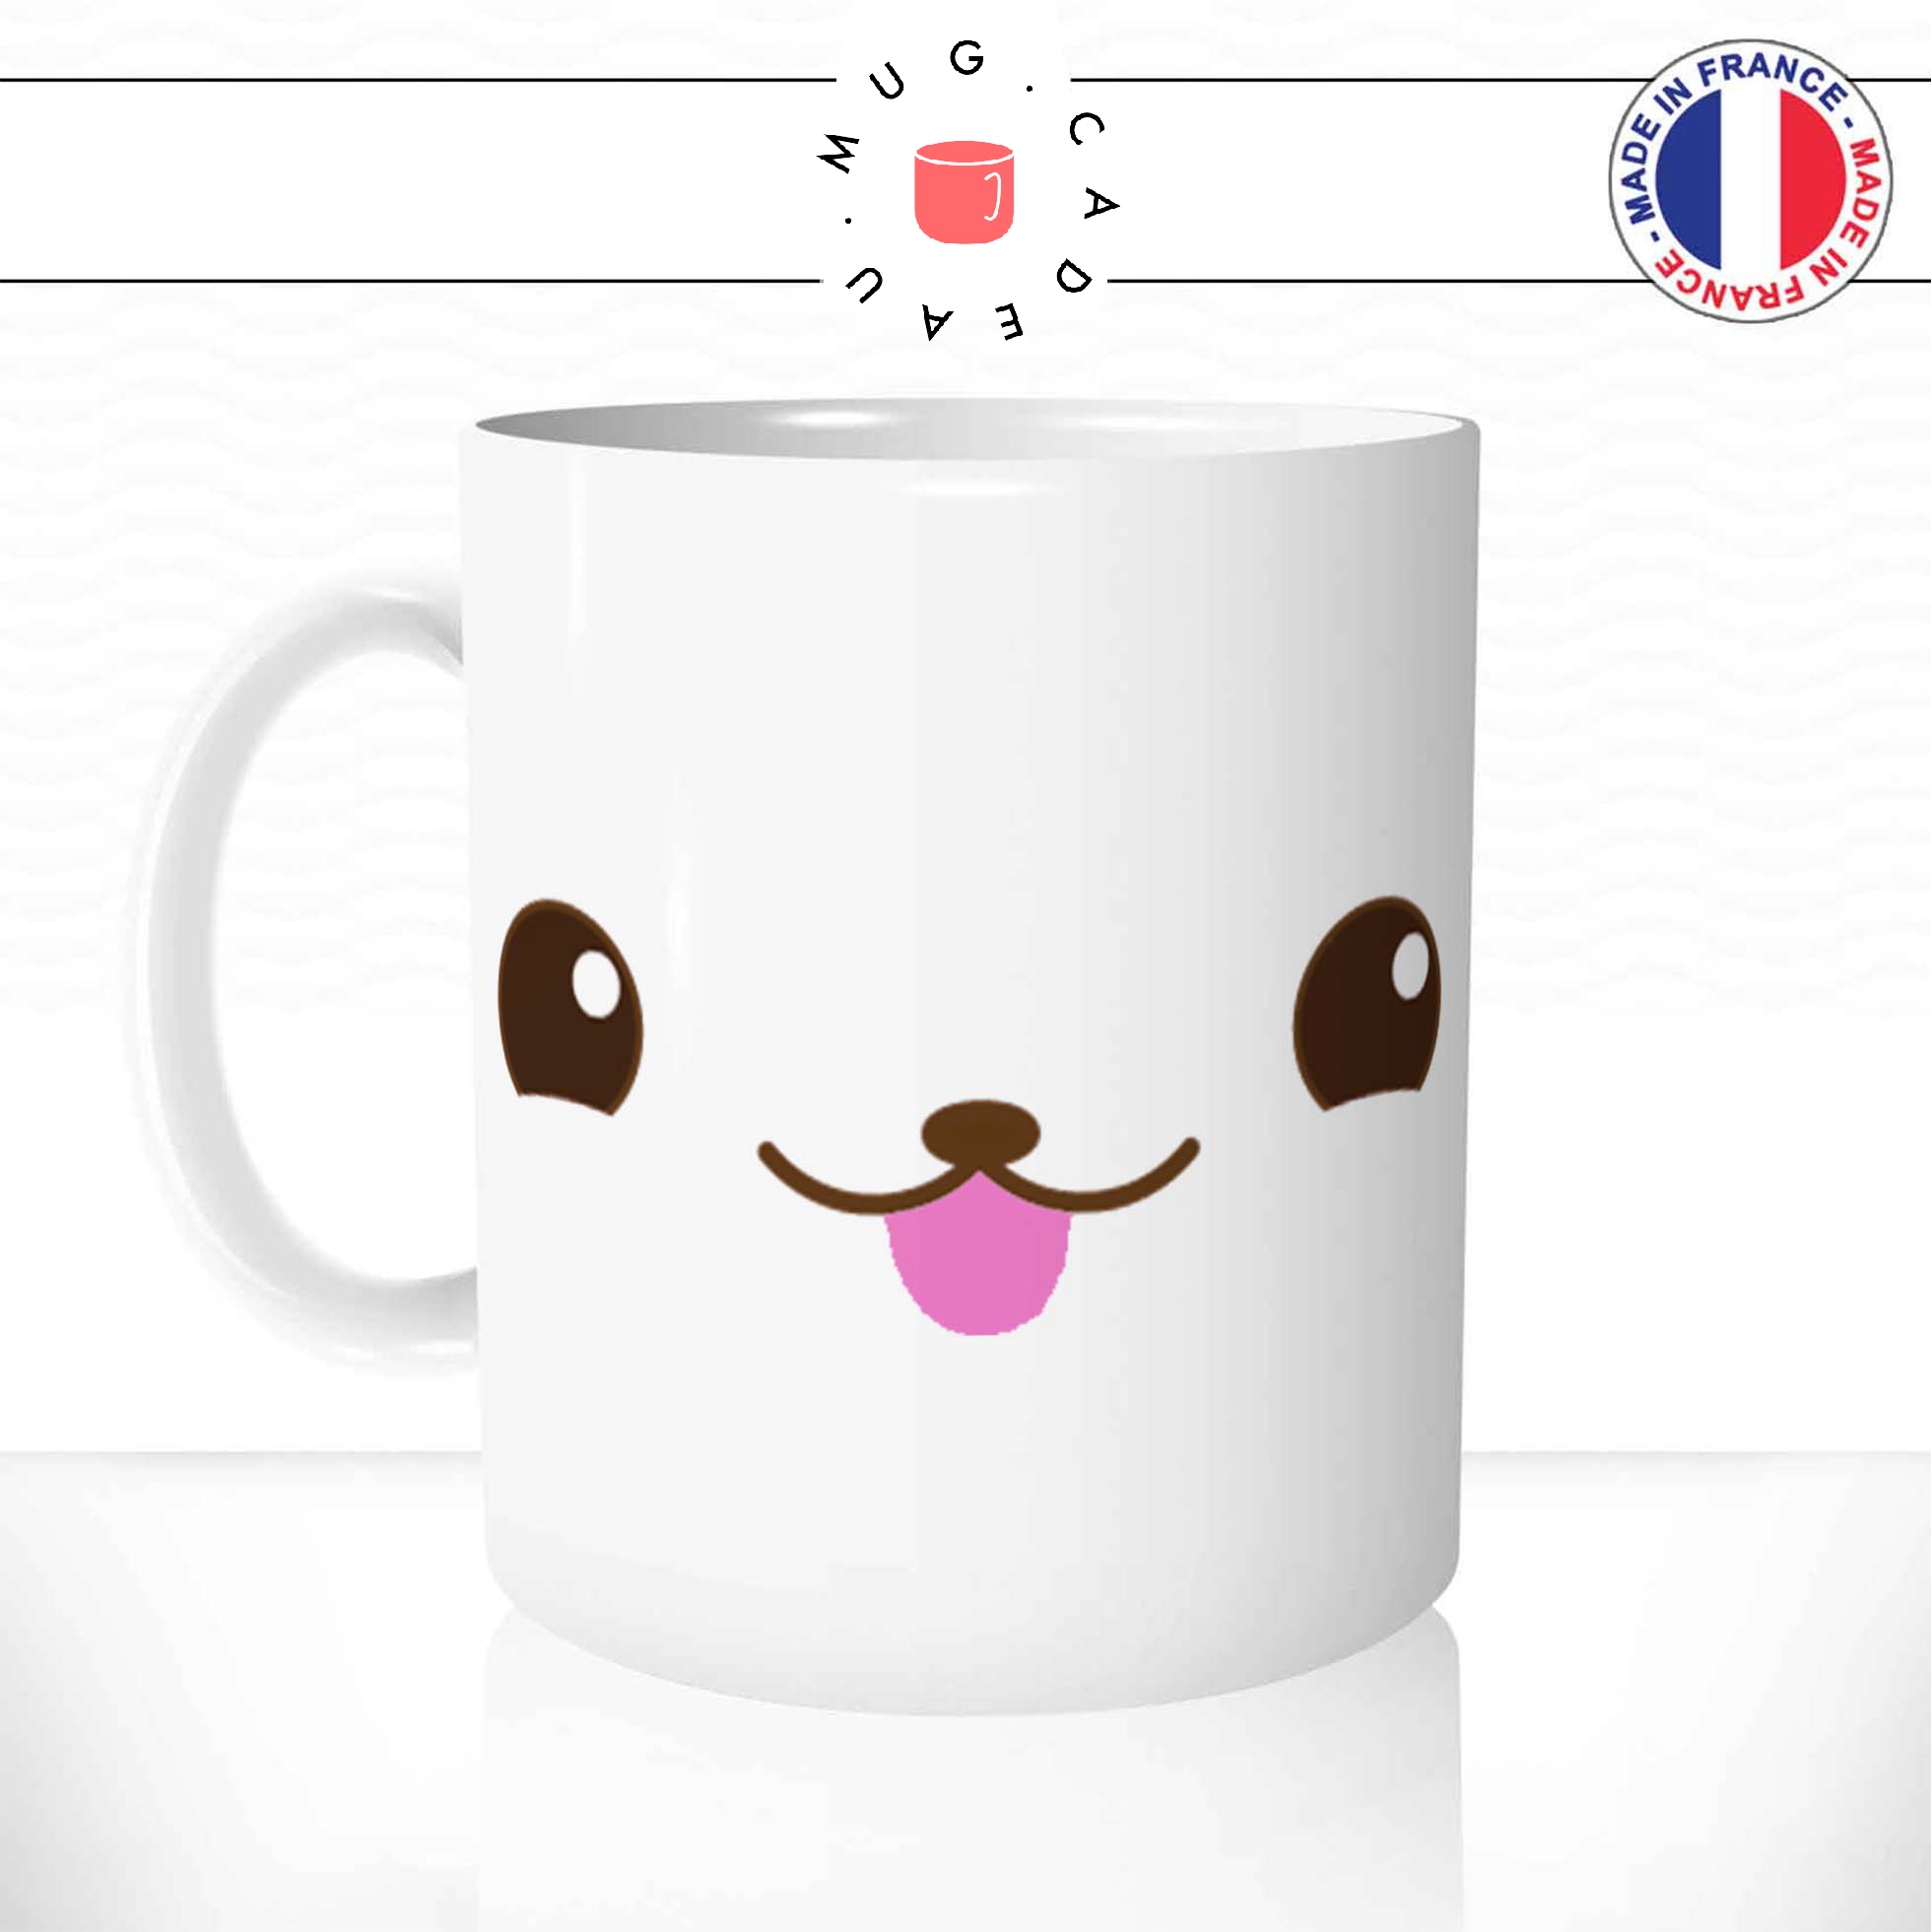 mug-tasse-ref3-yeux-langue-chat-visage-cute-cafe-the-mugs-tasses-personnalise-anse-gauche